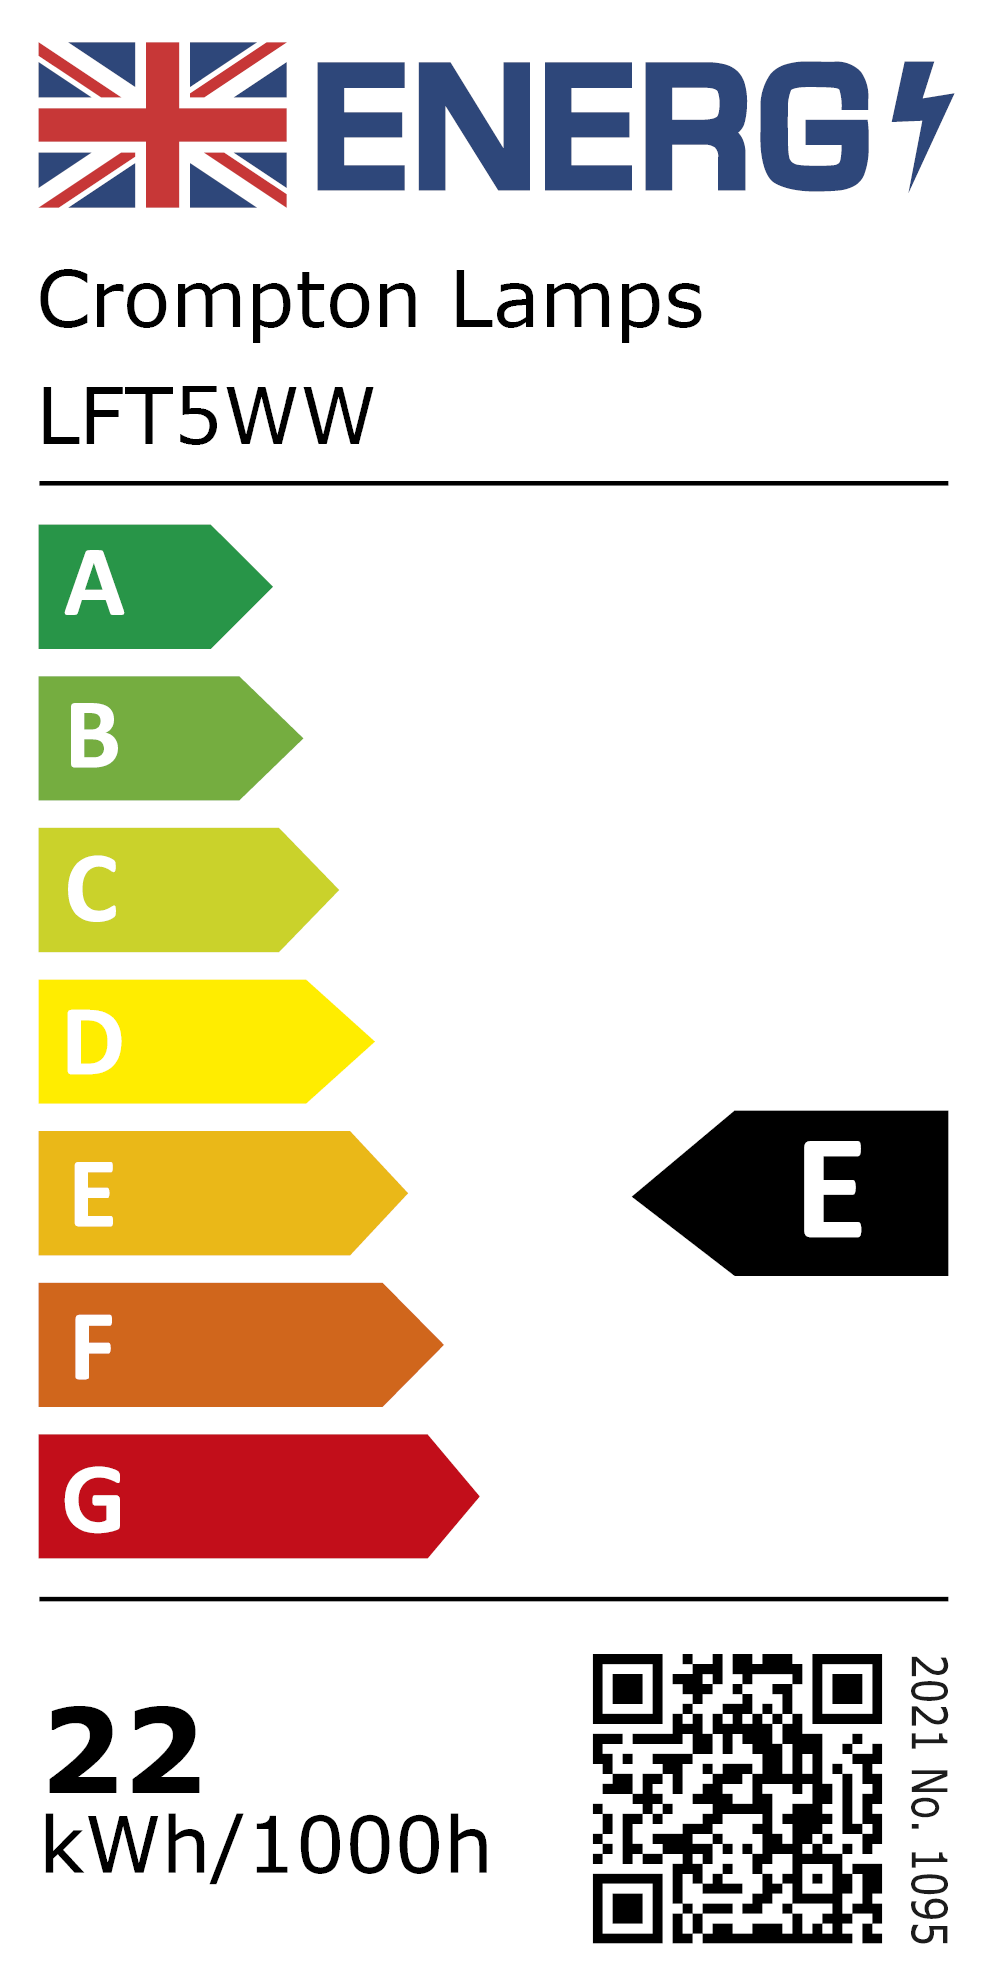 New 2021 Energy Rating Label: Stock Code LFT5WW